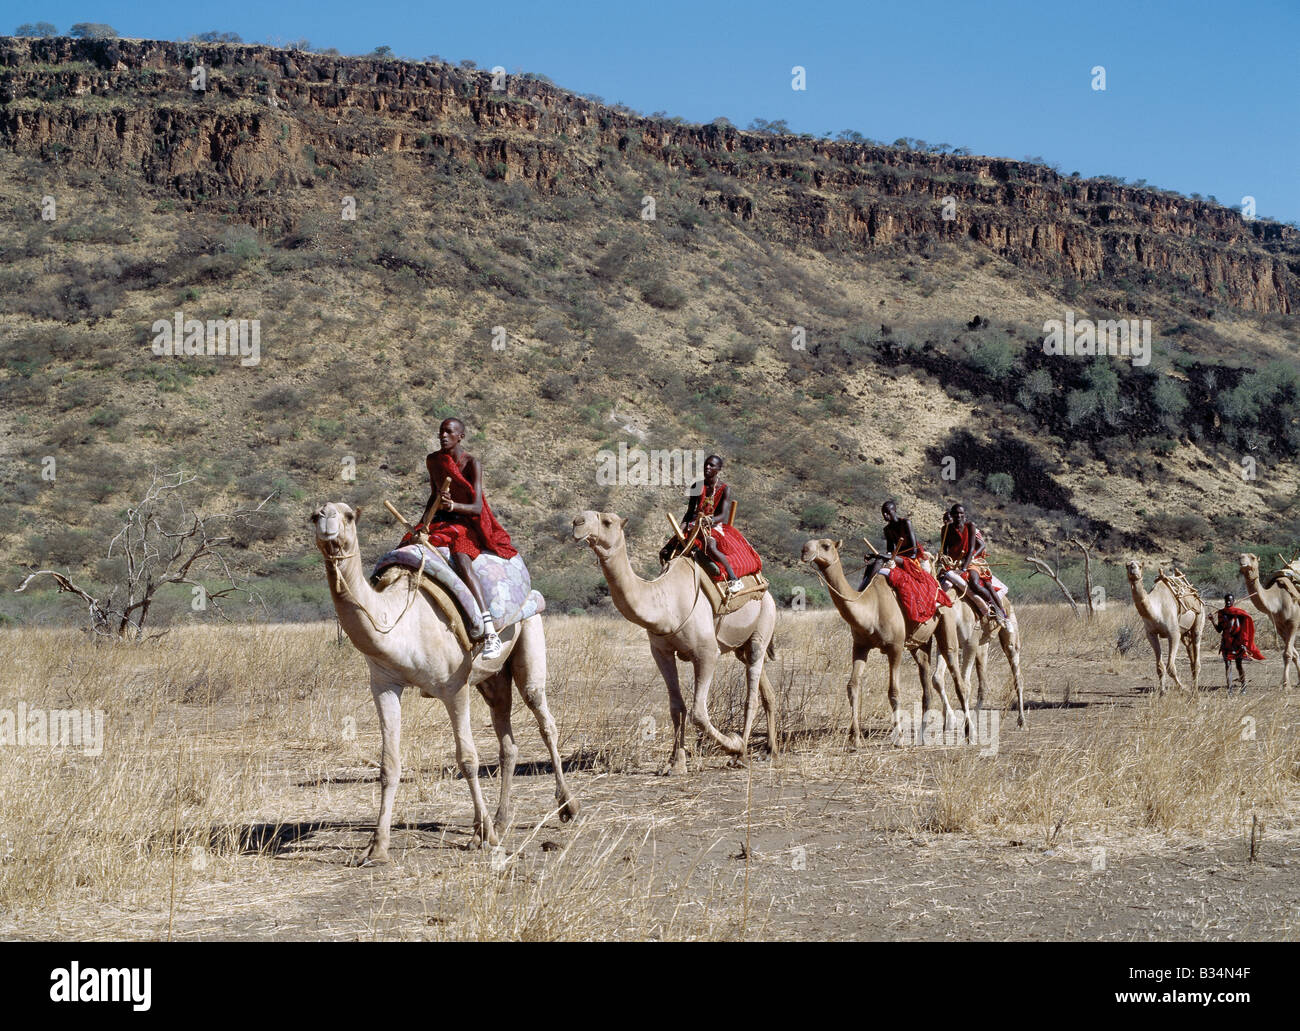 Kenya, Rift Valley Province, Olorgasailie. Maasai men ride camels in the dry bush country at Olorgasailie, situated between Nairobi and Lake Magadi. Stock Photo